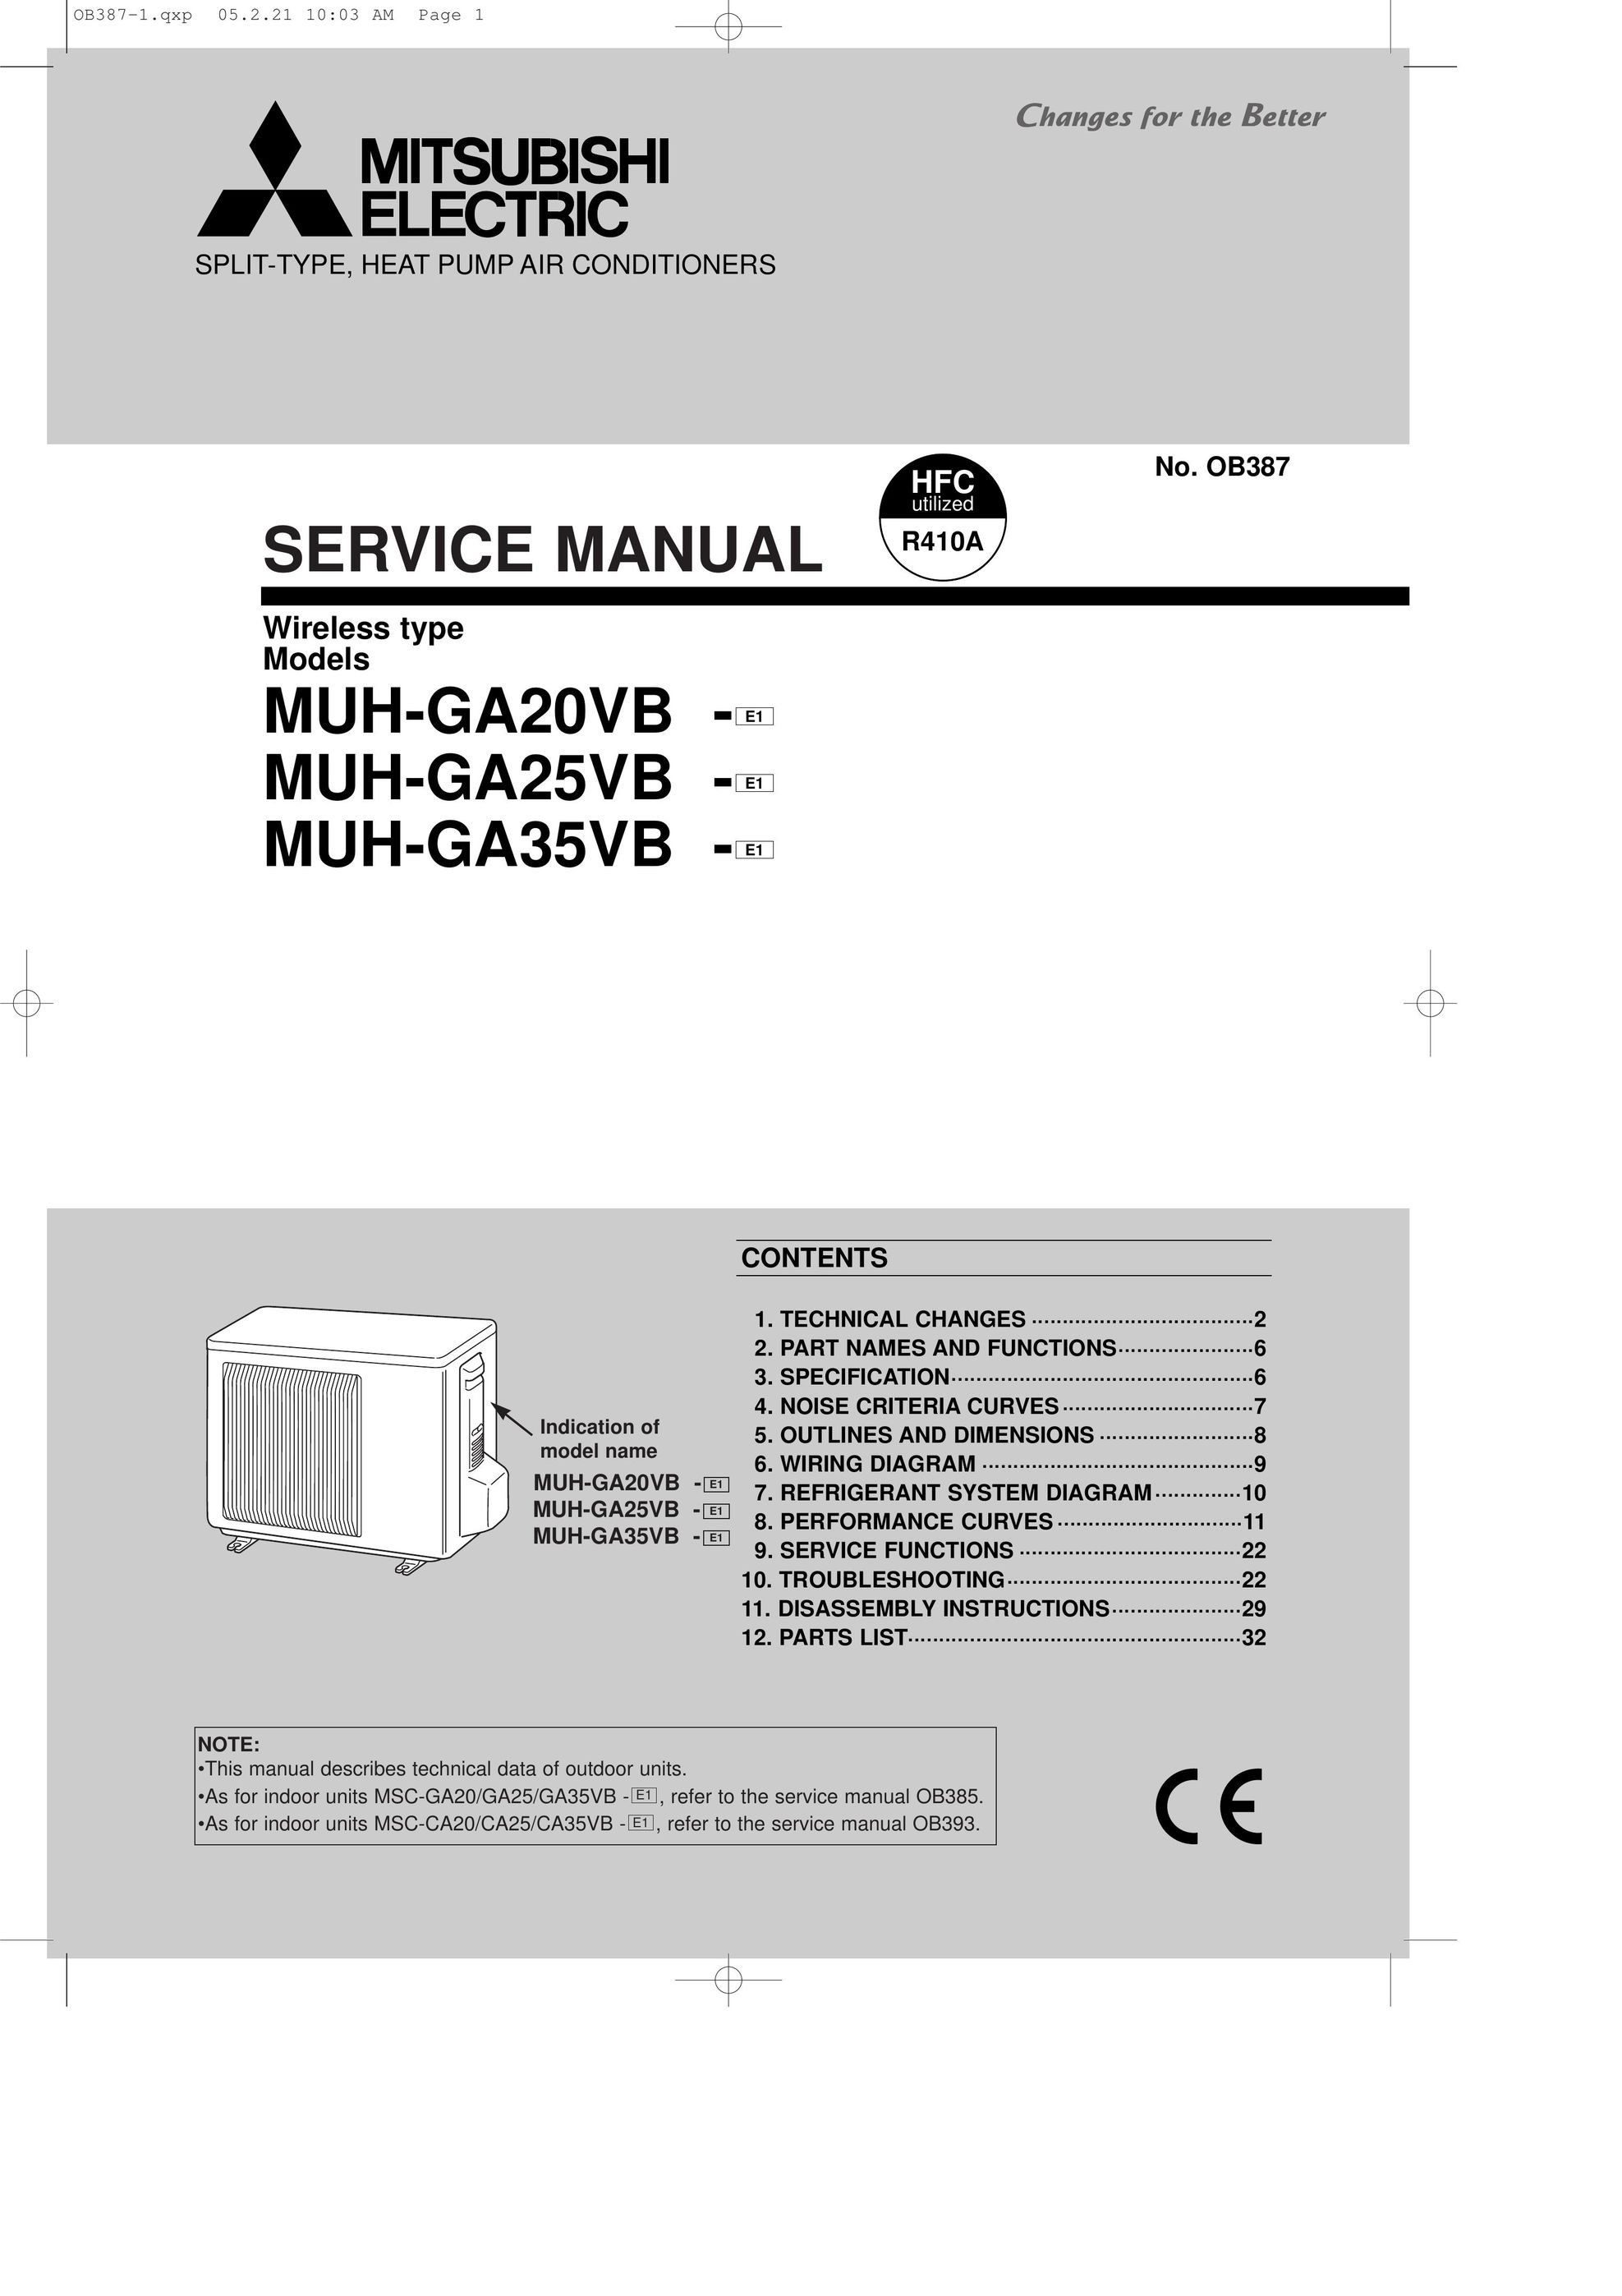 Pioneer MUH-GA20VB Air Conditioner User Manual